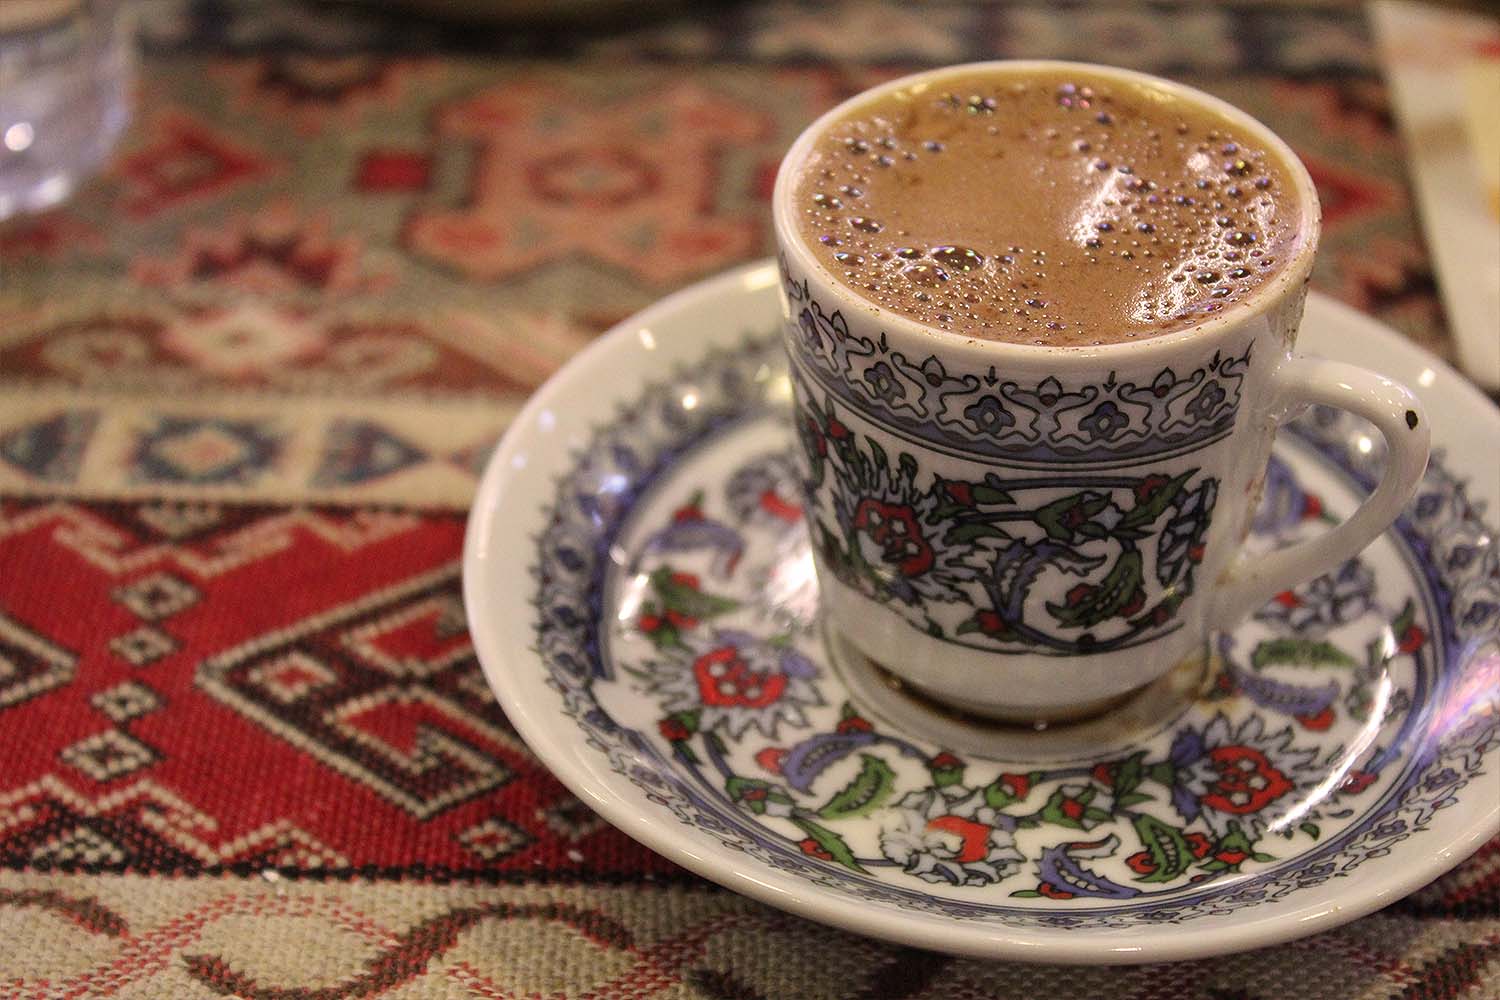 The Turkish coffee